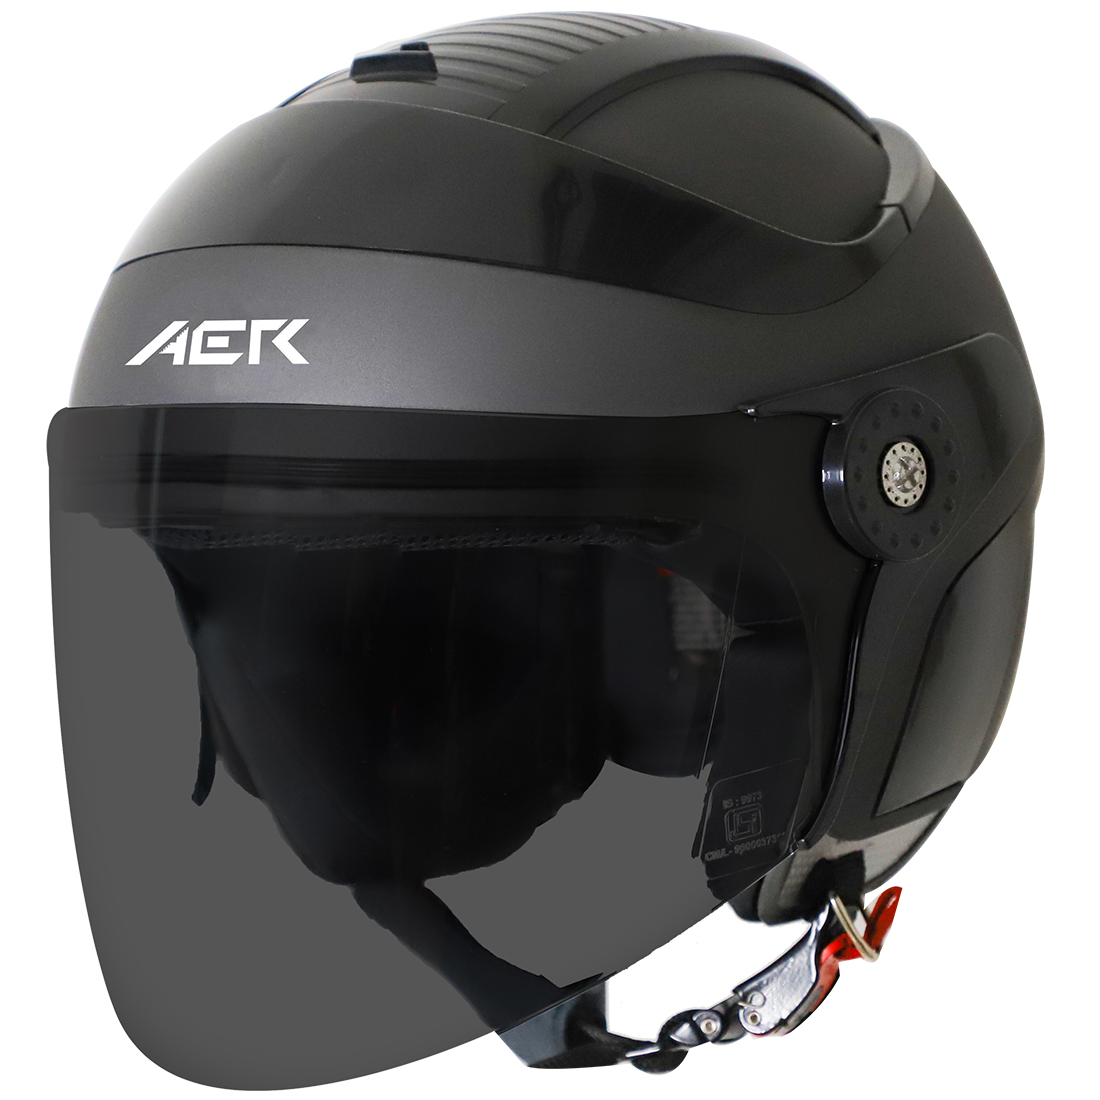 Steelbird SB-29 AER ISI Certified Open Face Helmet For Men And Women (Matt H.Grey Black With Smoke Visor)